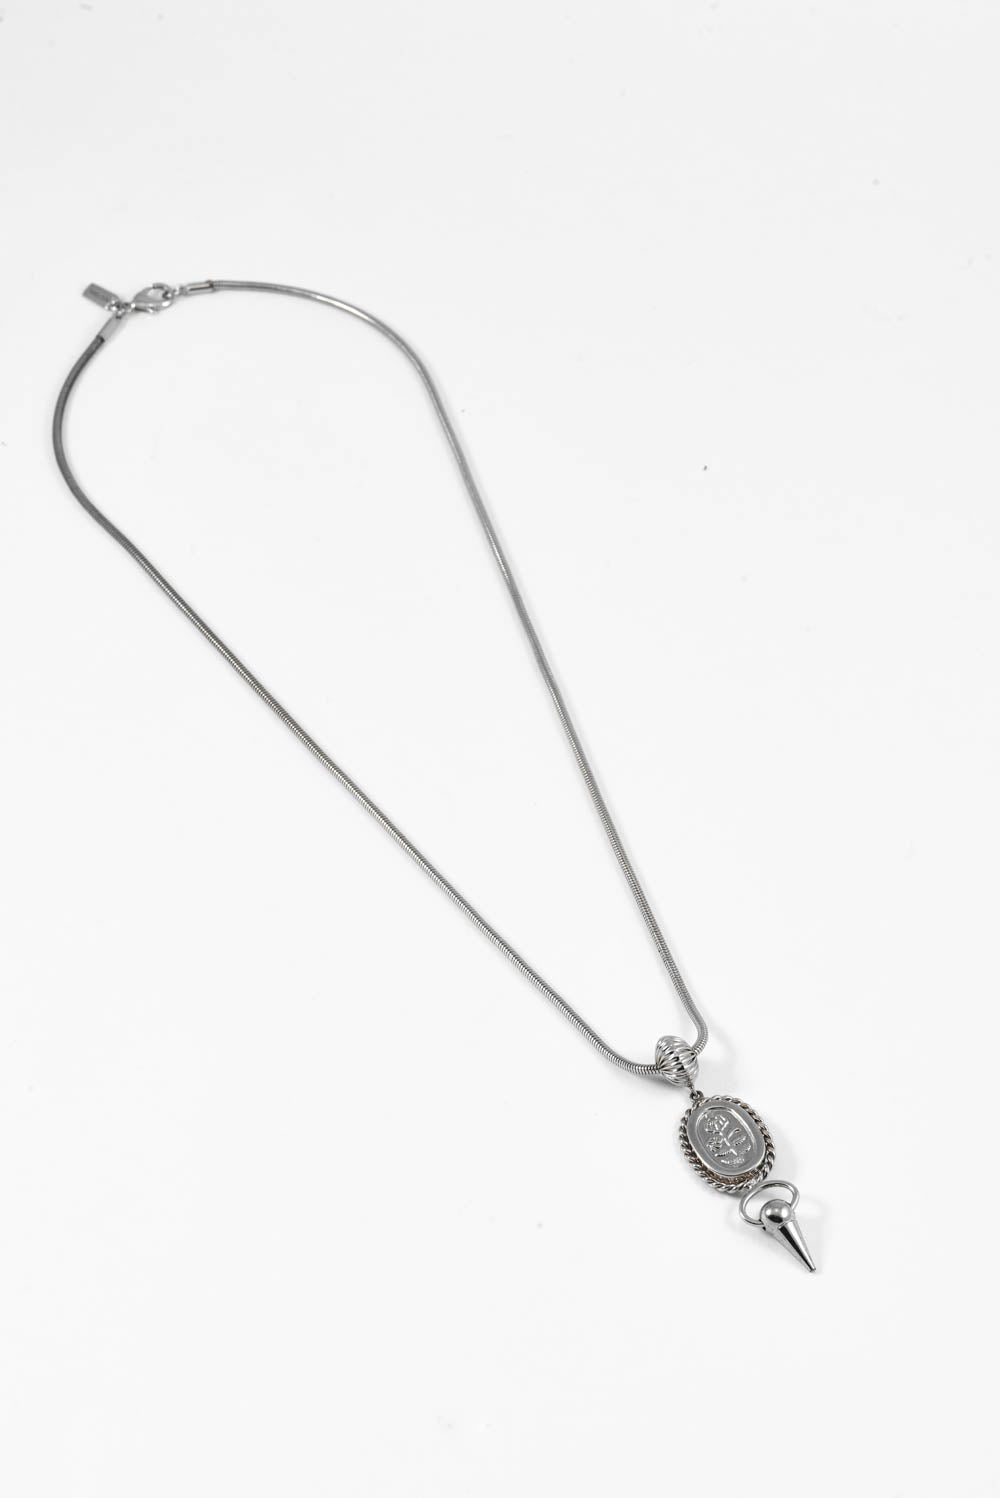 Amama,SubRosa Thorn Pendant in Silver